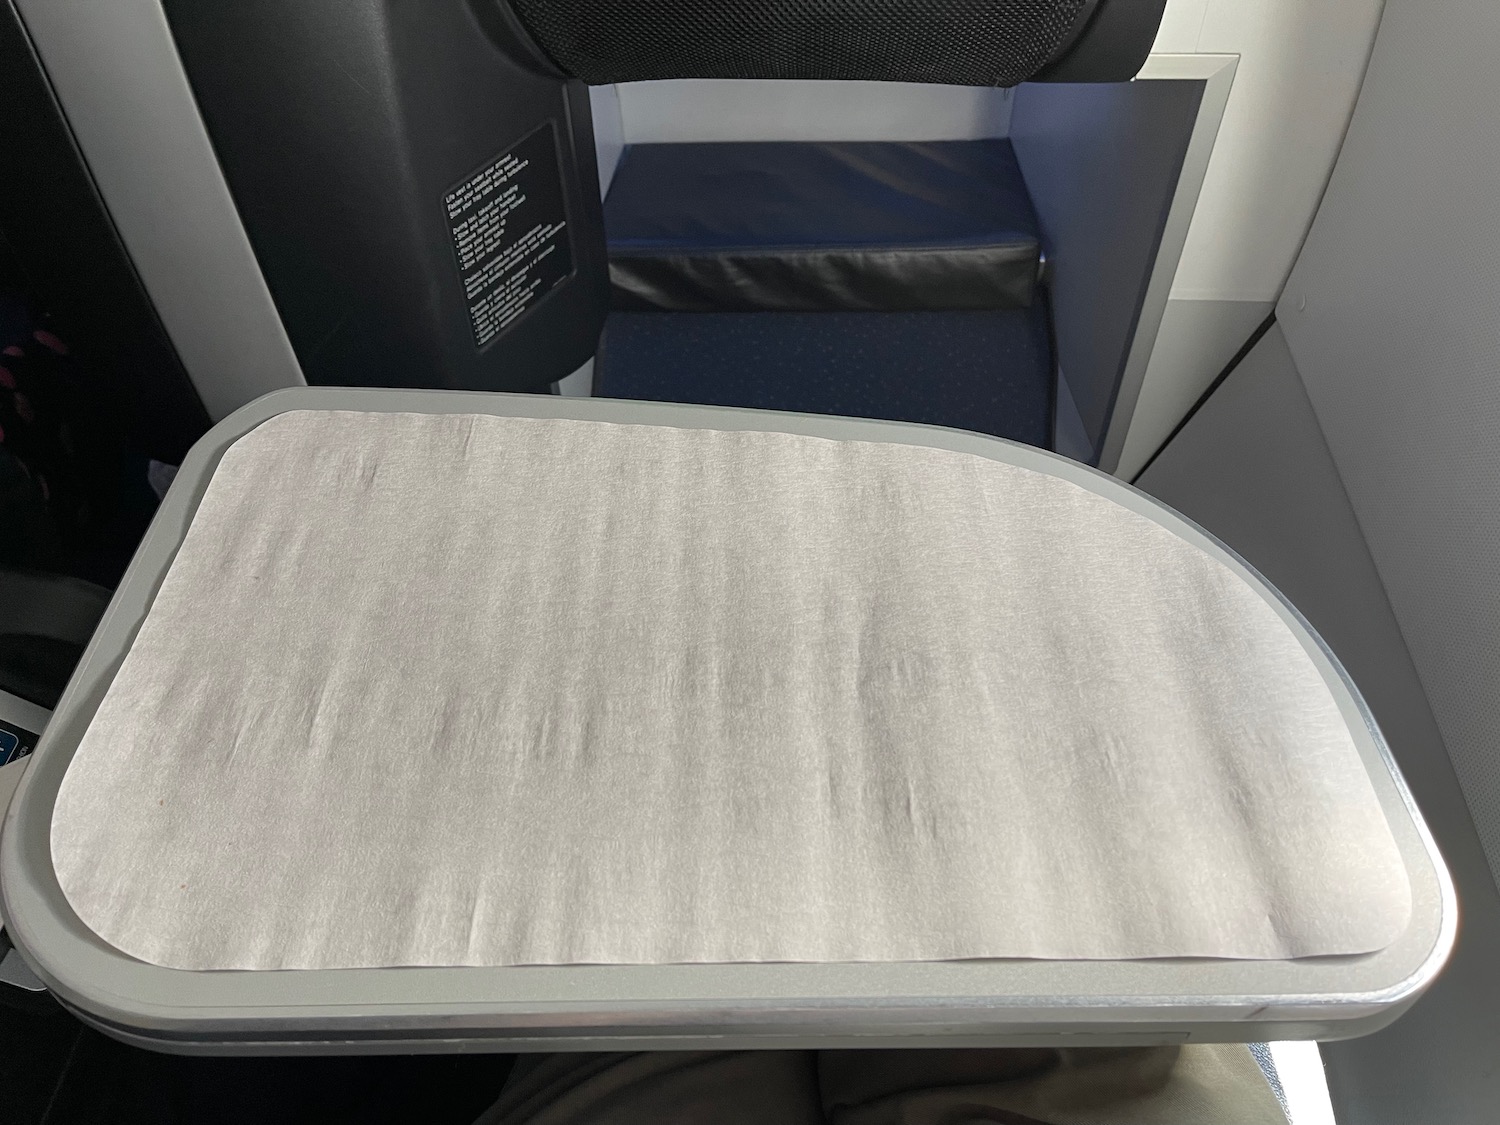 a tray on a plane